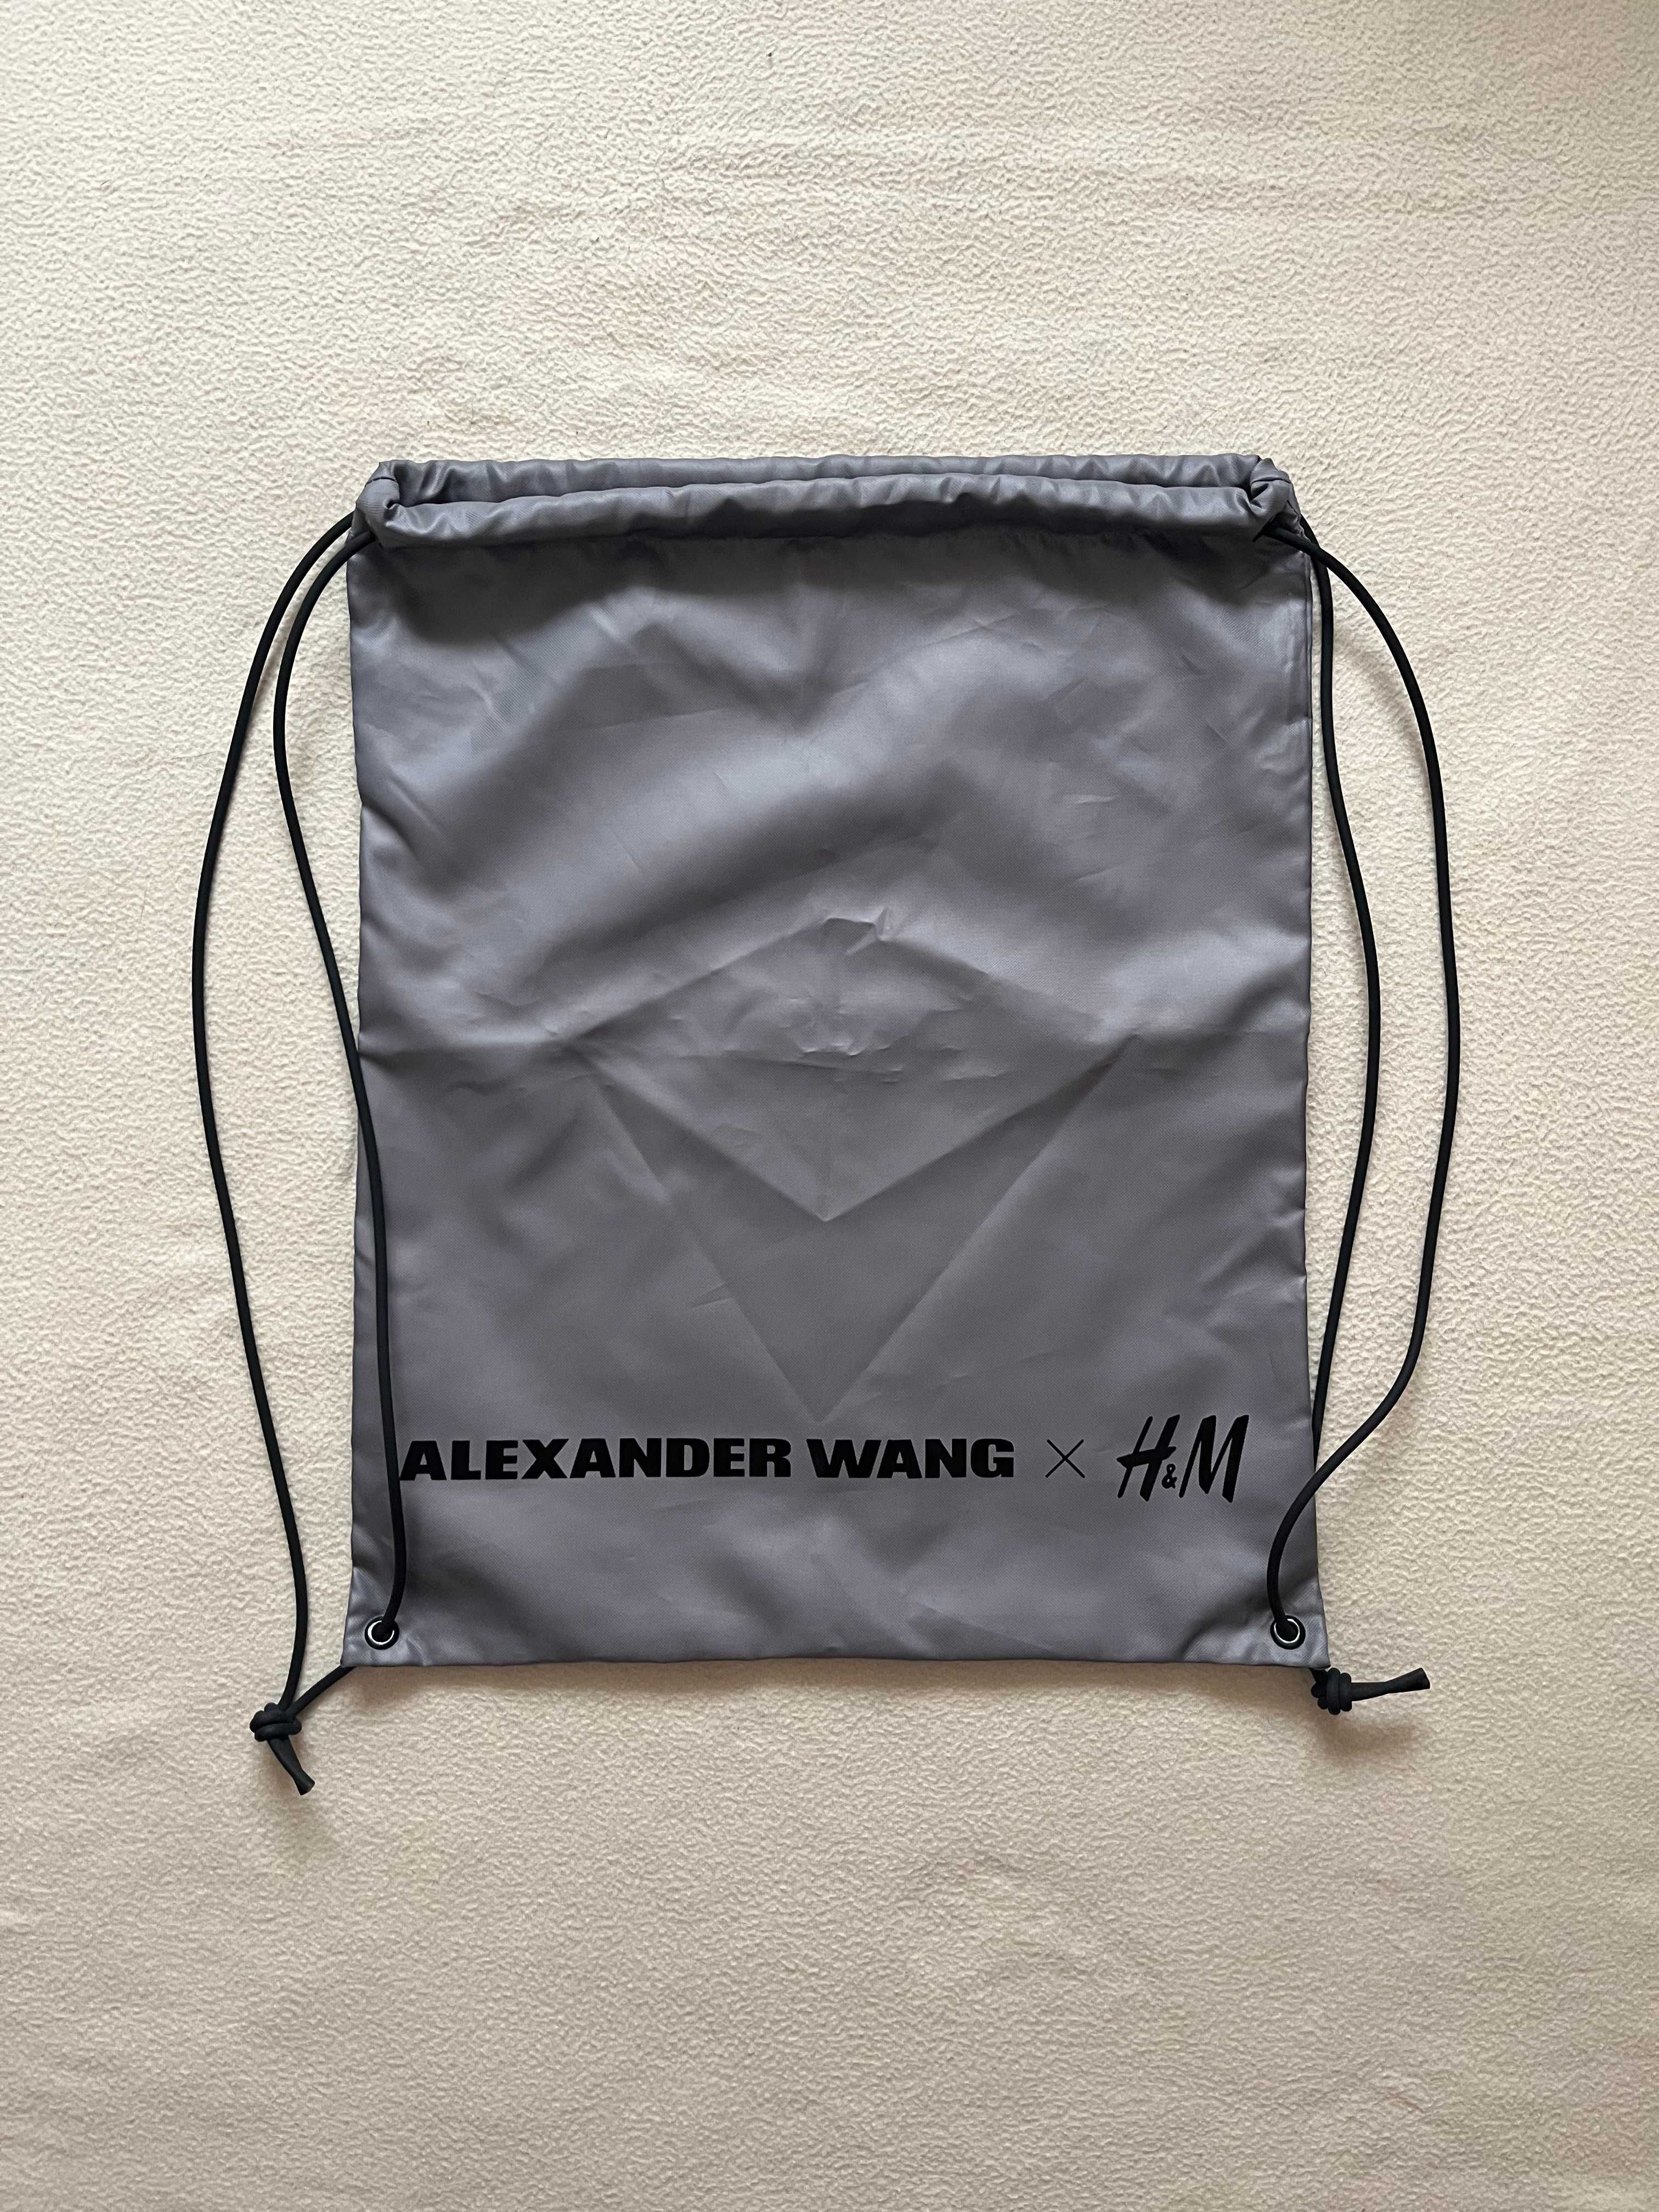 ALEXANDER WANG X H&M worek plecak szary uniseks boss